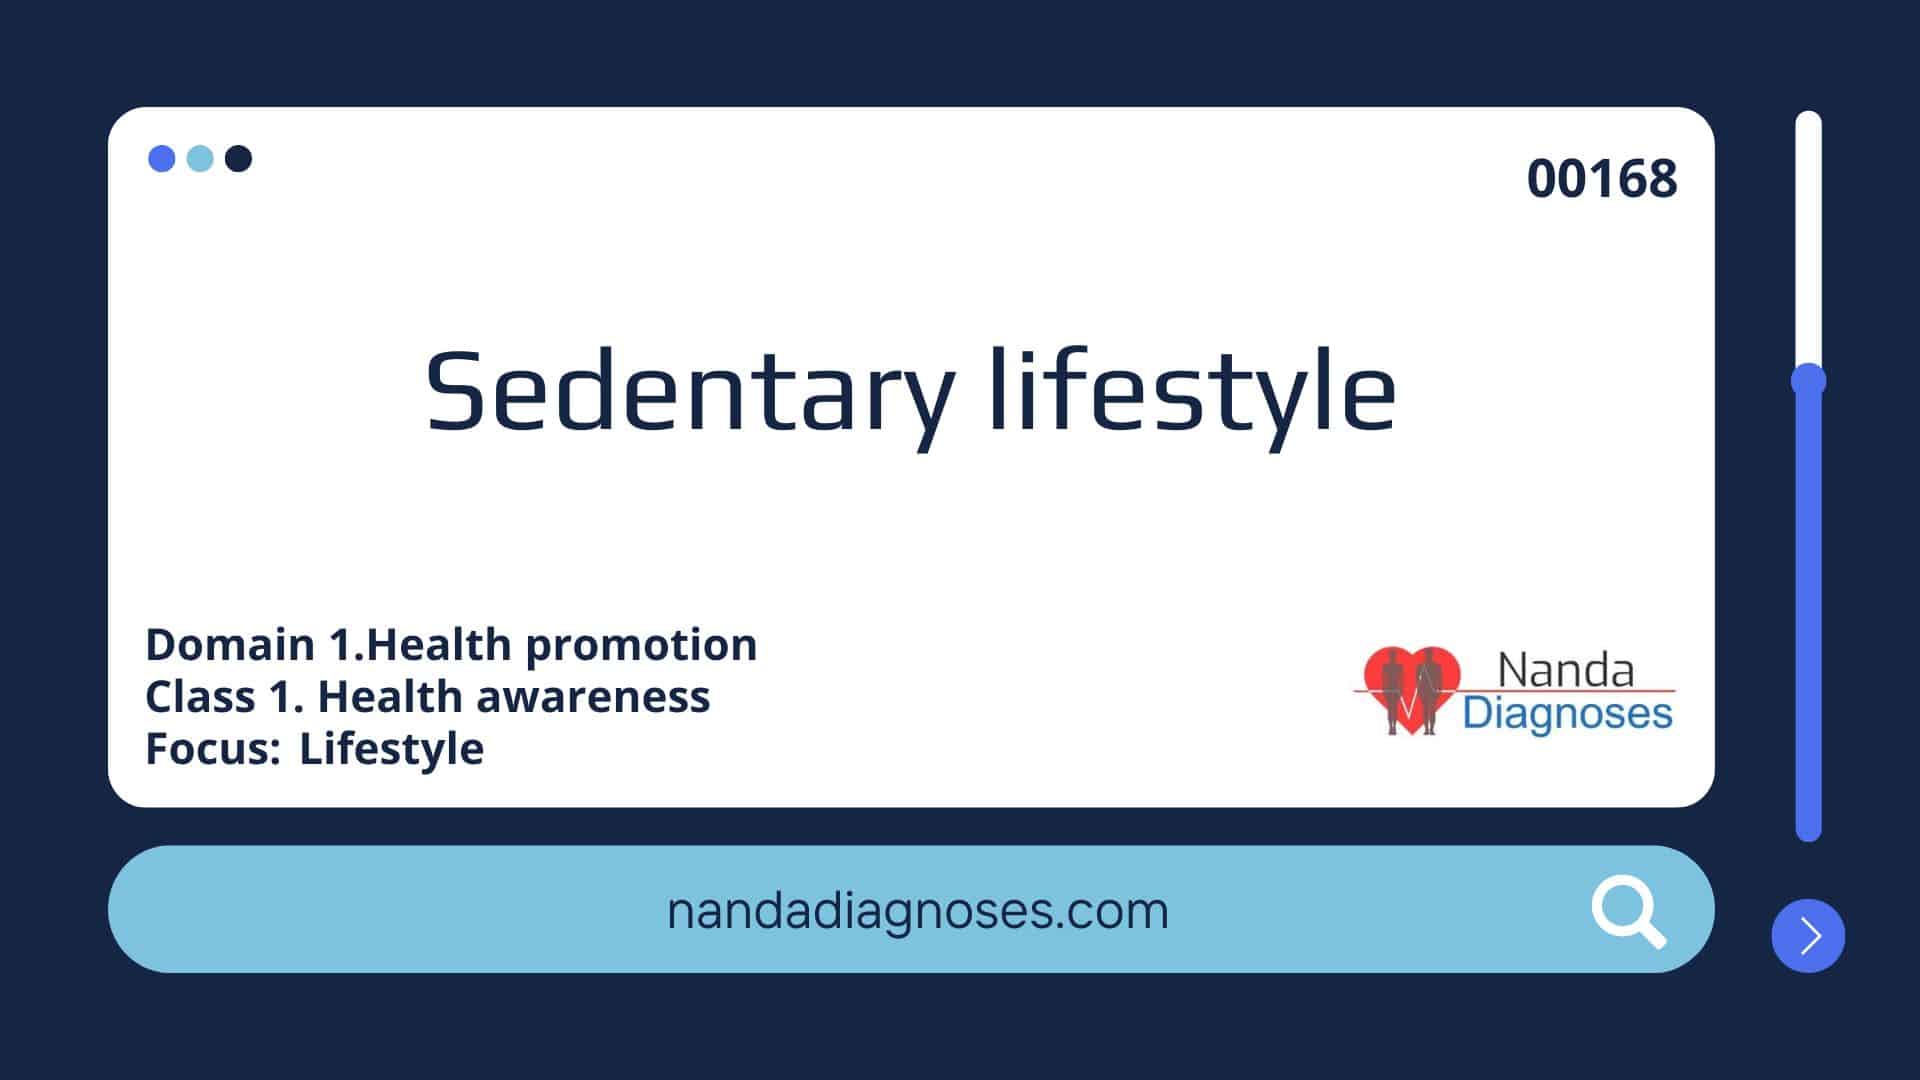 Nursing diagnosis Sedentary lifestyle